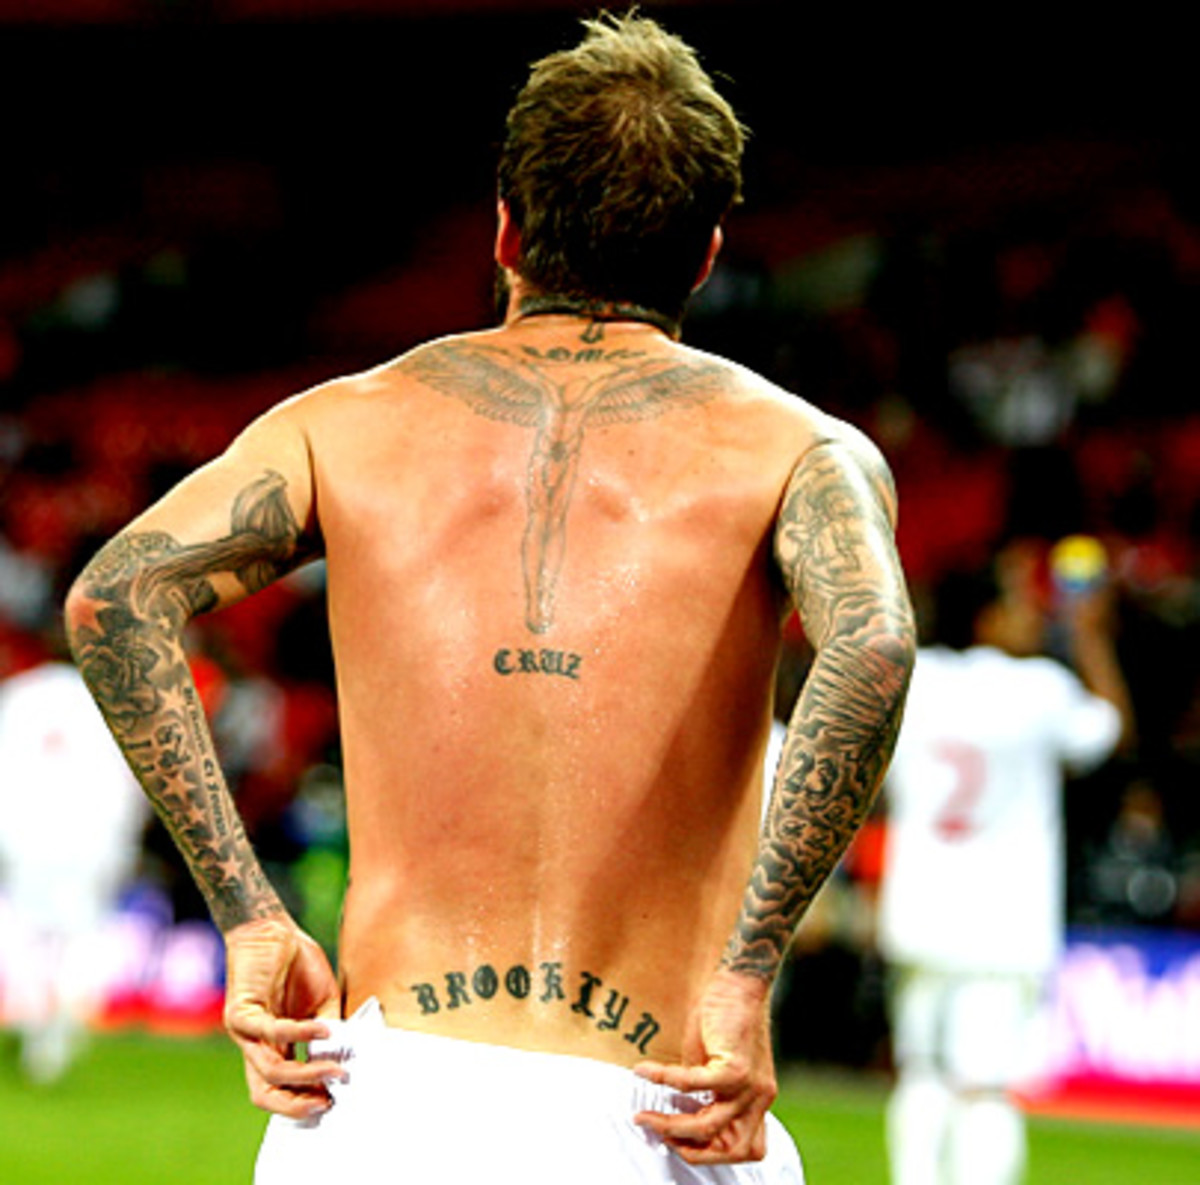 David Beckham's back tattoo